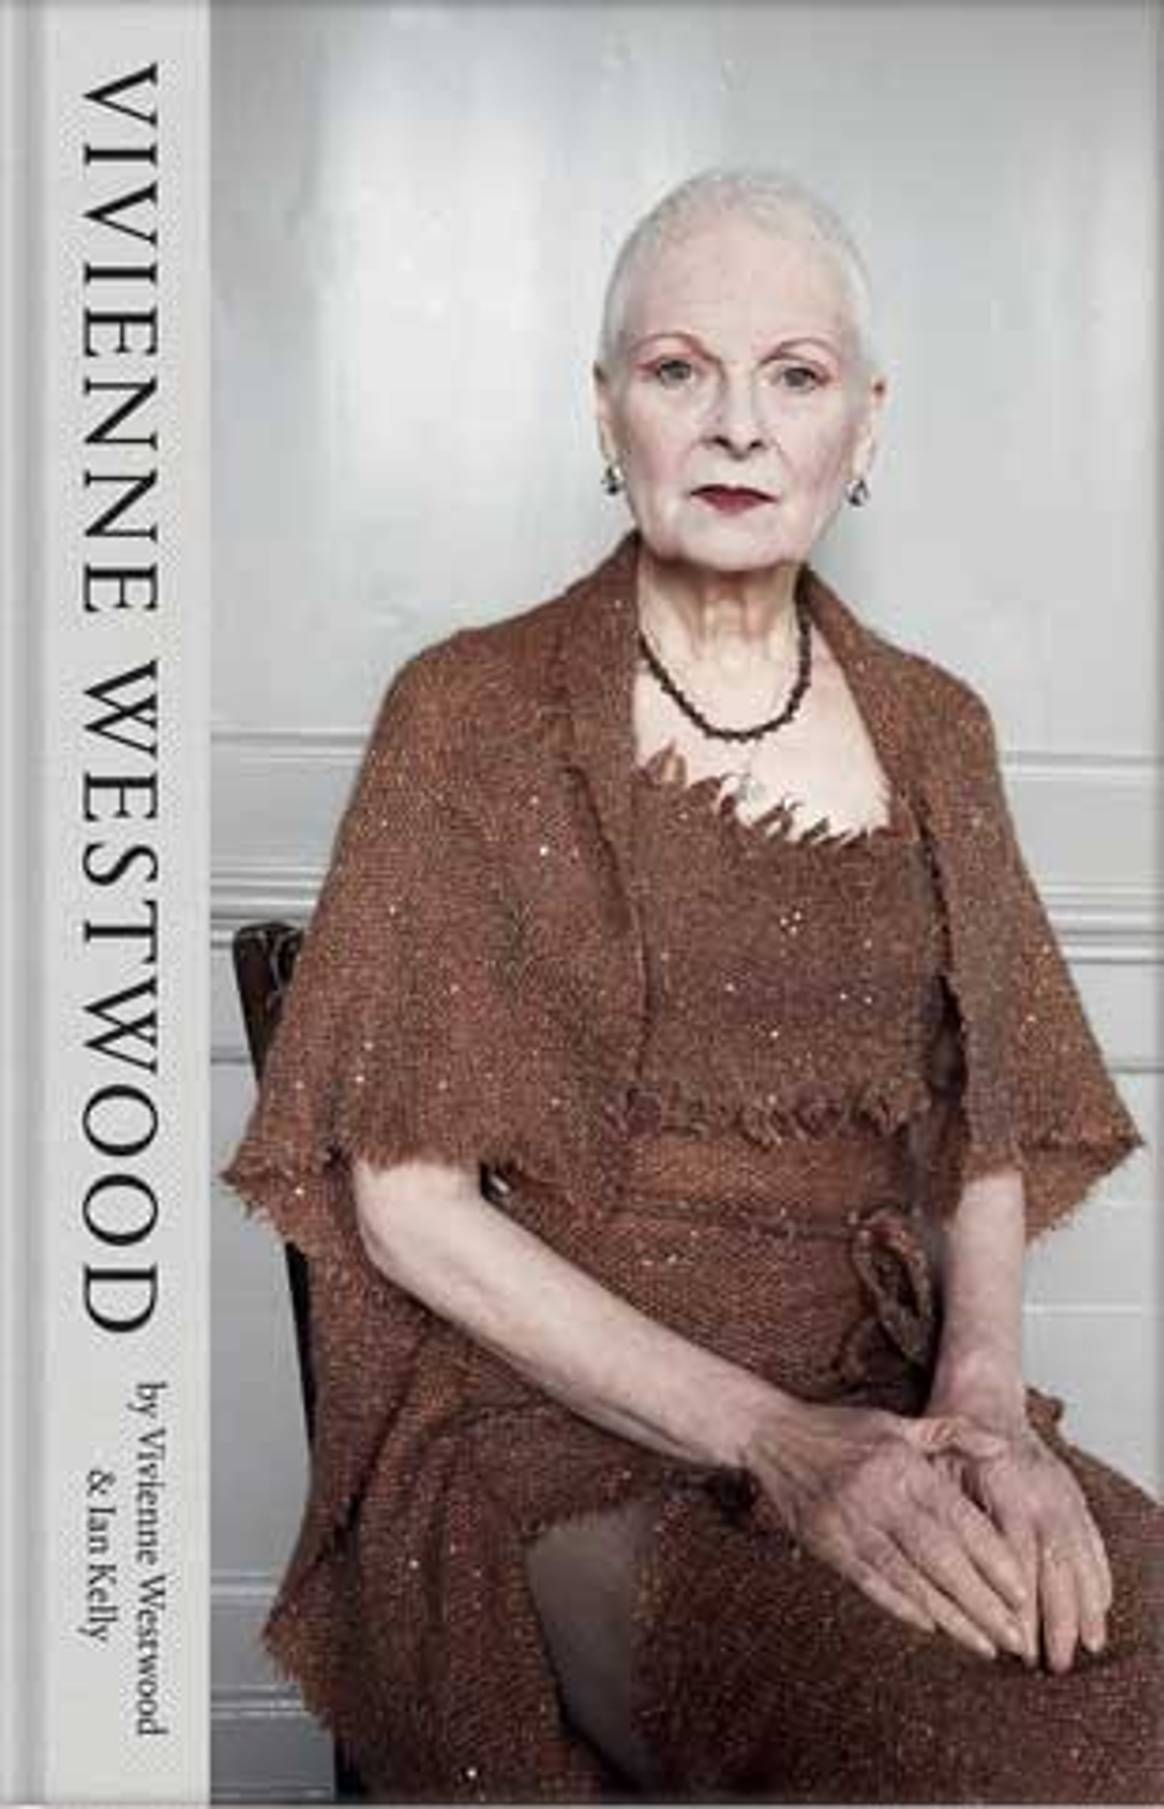 How did designer Vivienne Westwood become cult? - Pynck